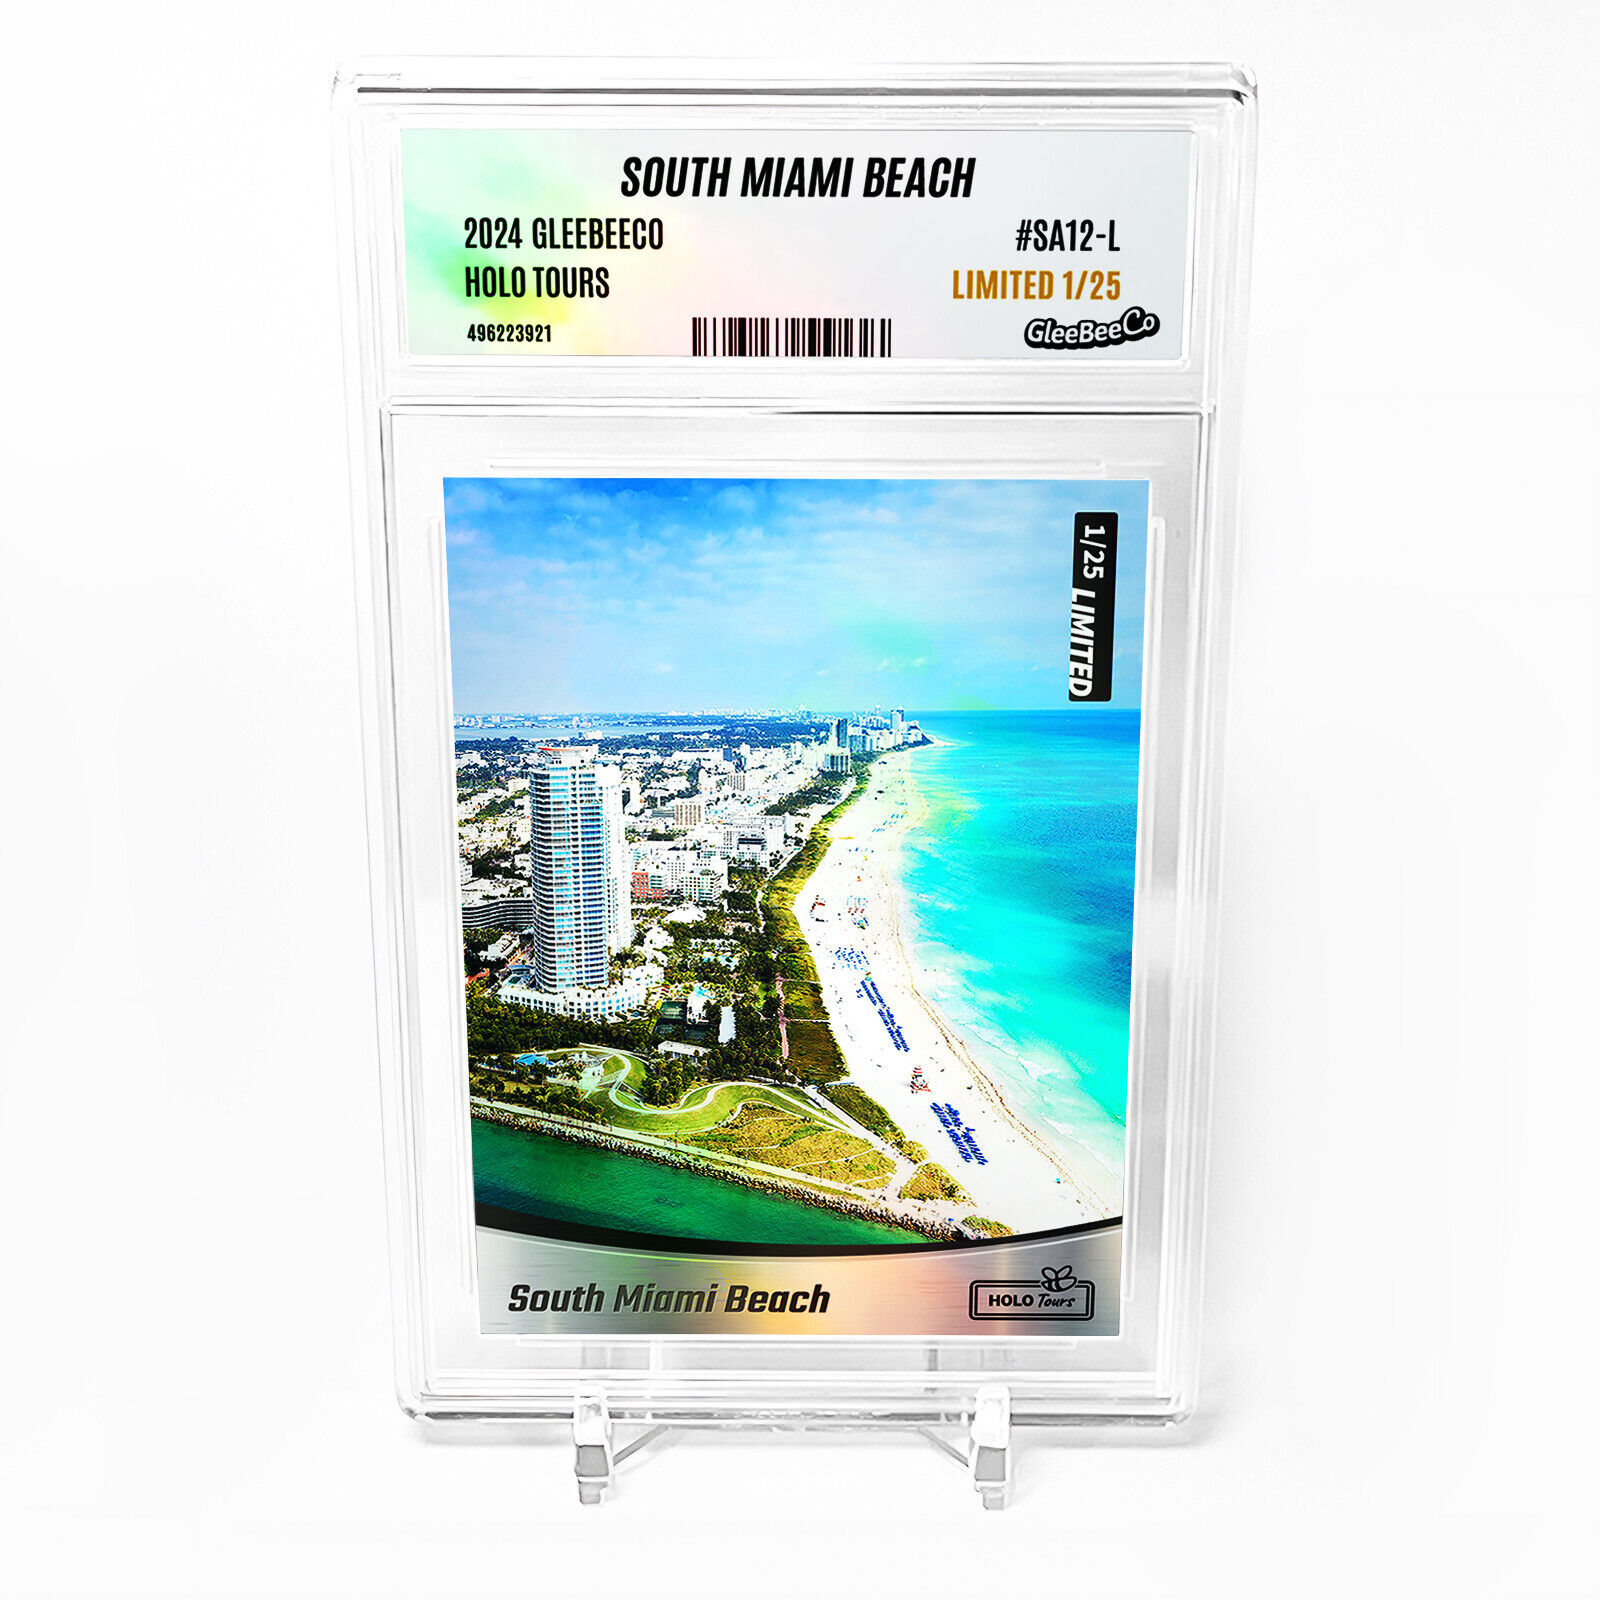 SOUTH MIAMI BEACH Photo Card 2024 GleeBeeCo Holo Tours Florida #SA12-L /25 Made